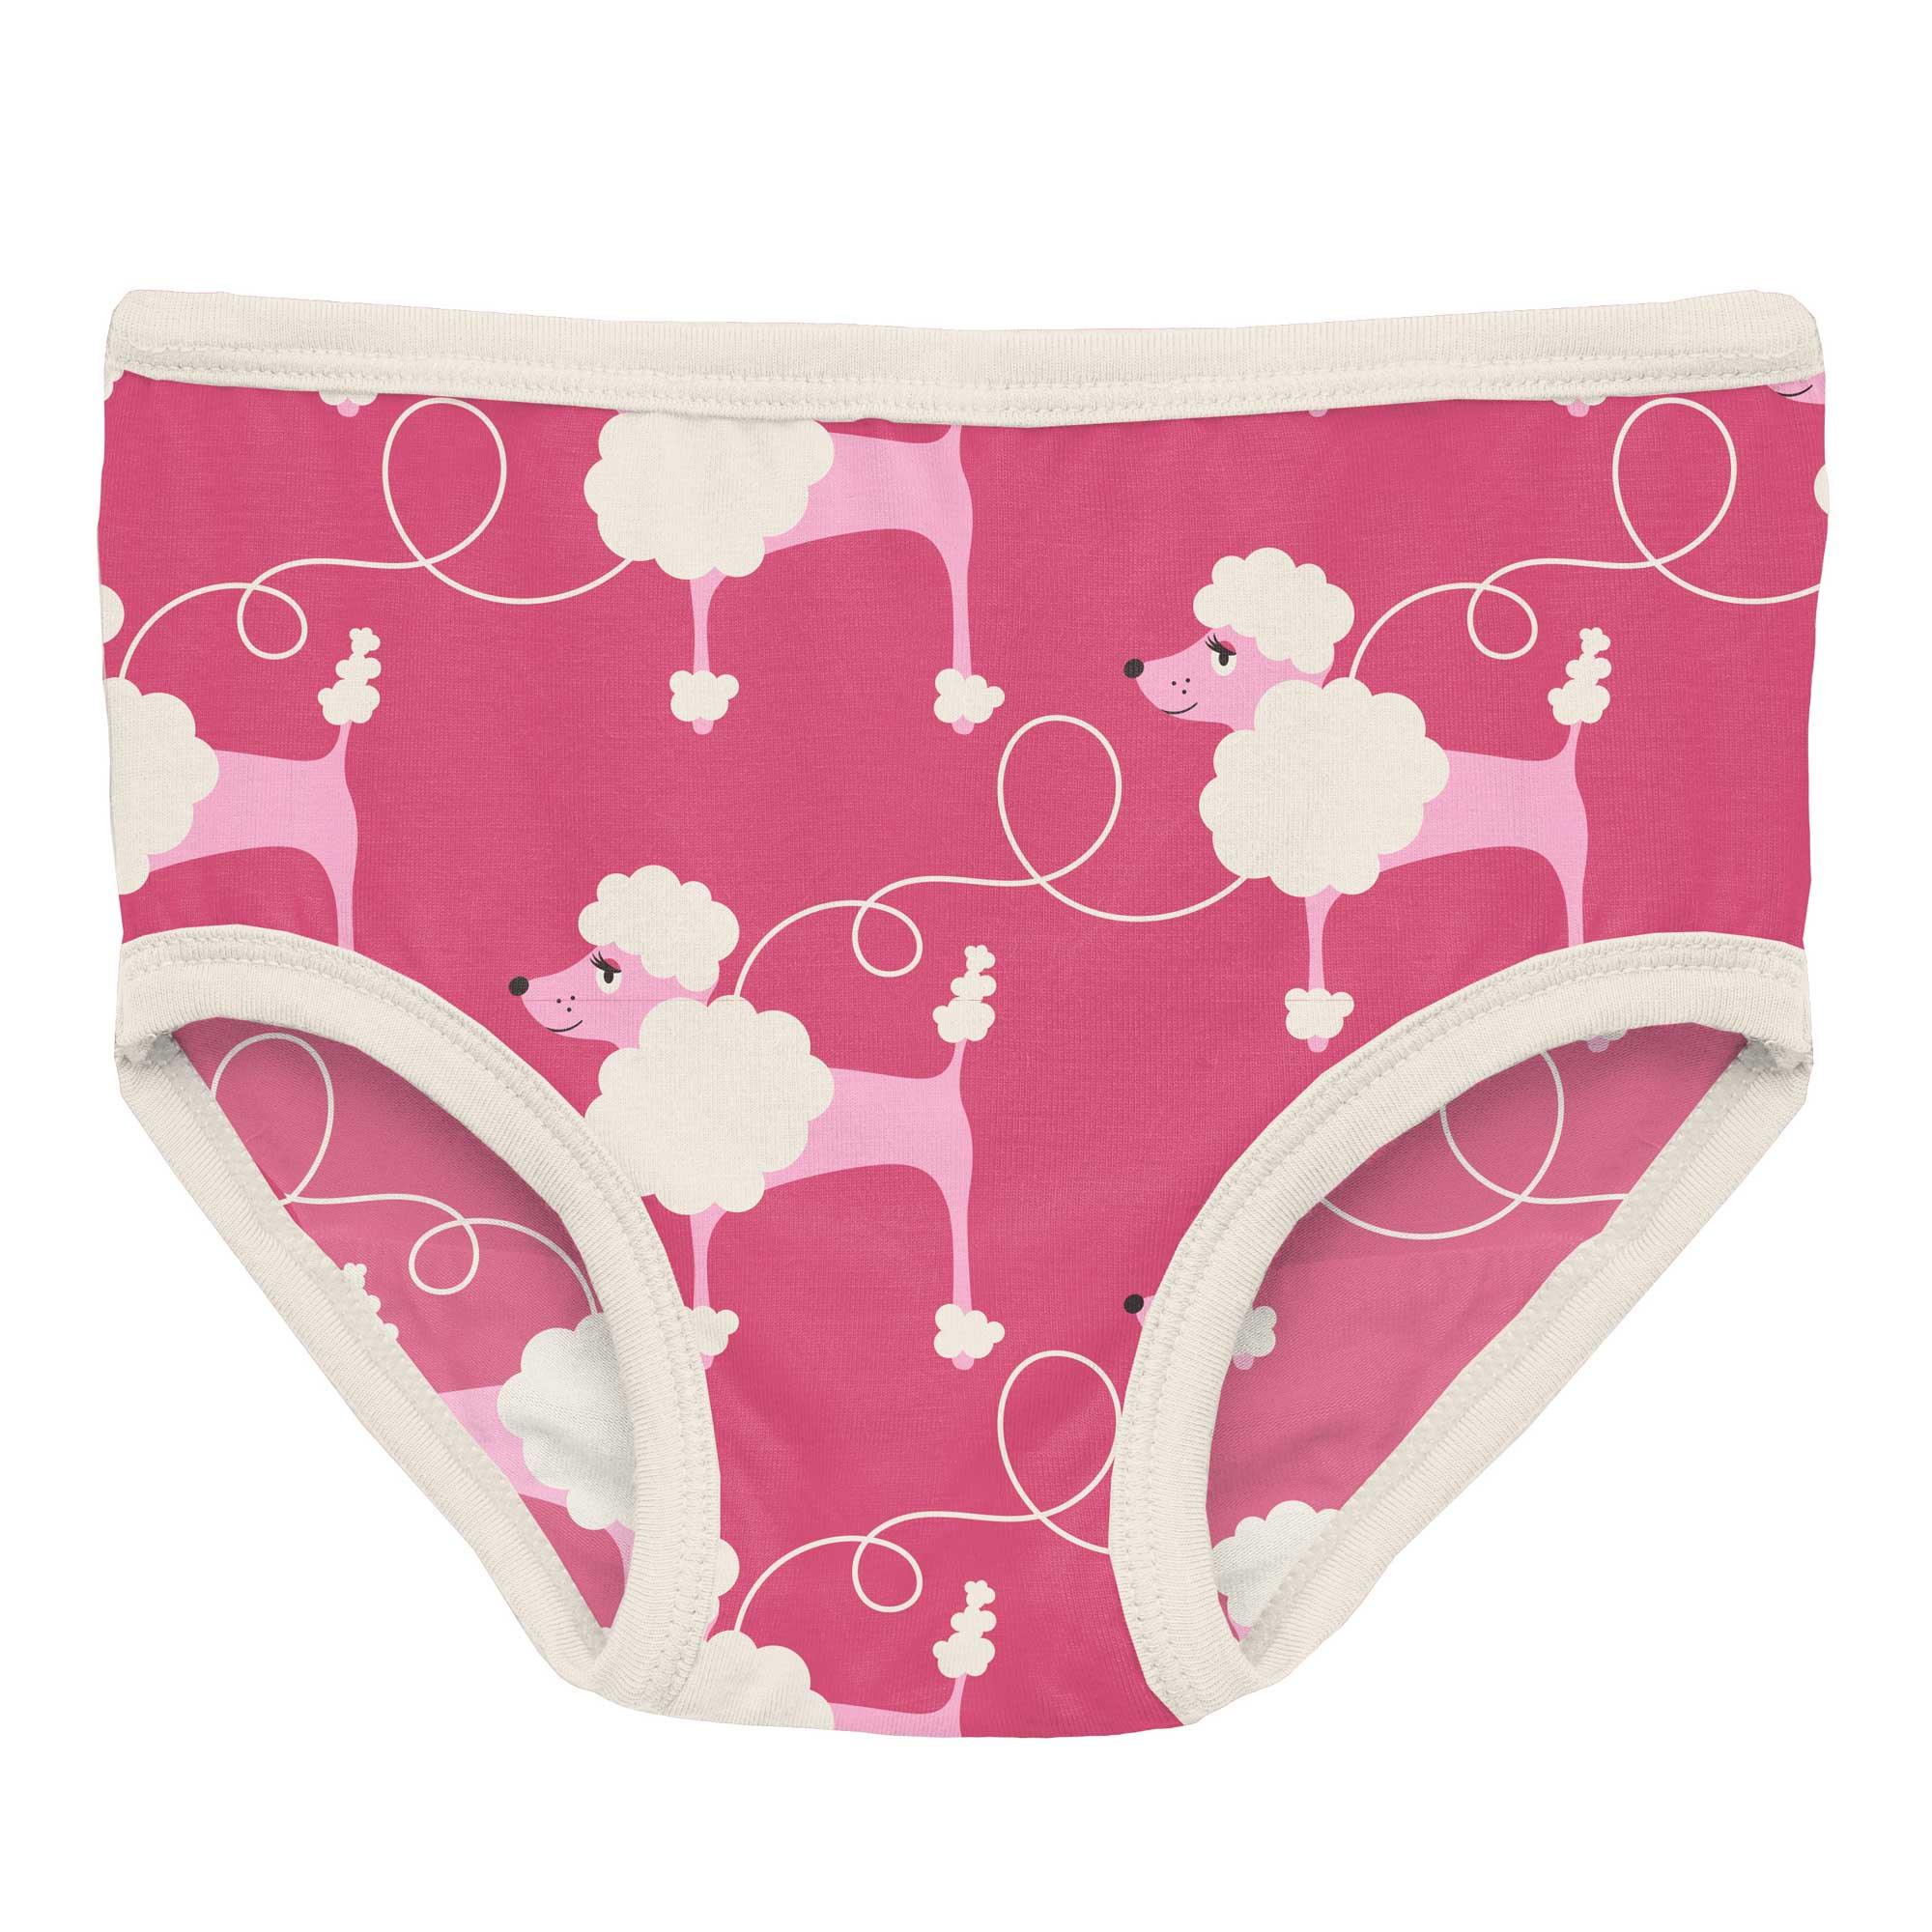 Kickee Pants Bamboo Girls Underwear - Flamingo Poodles